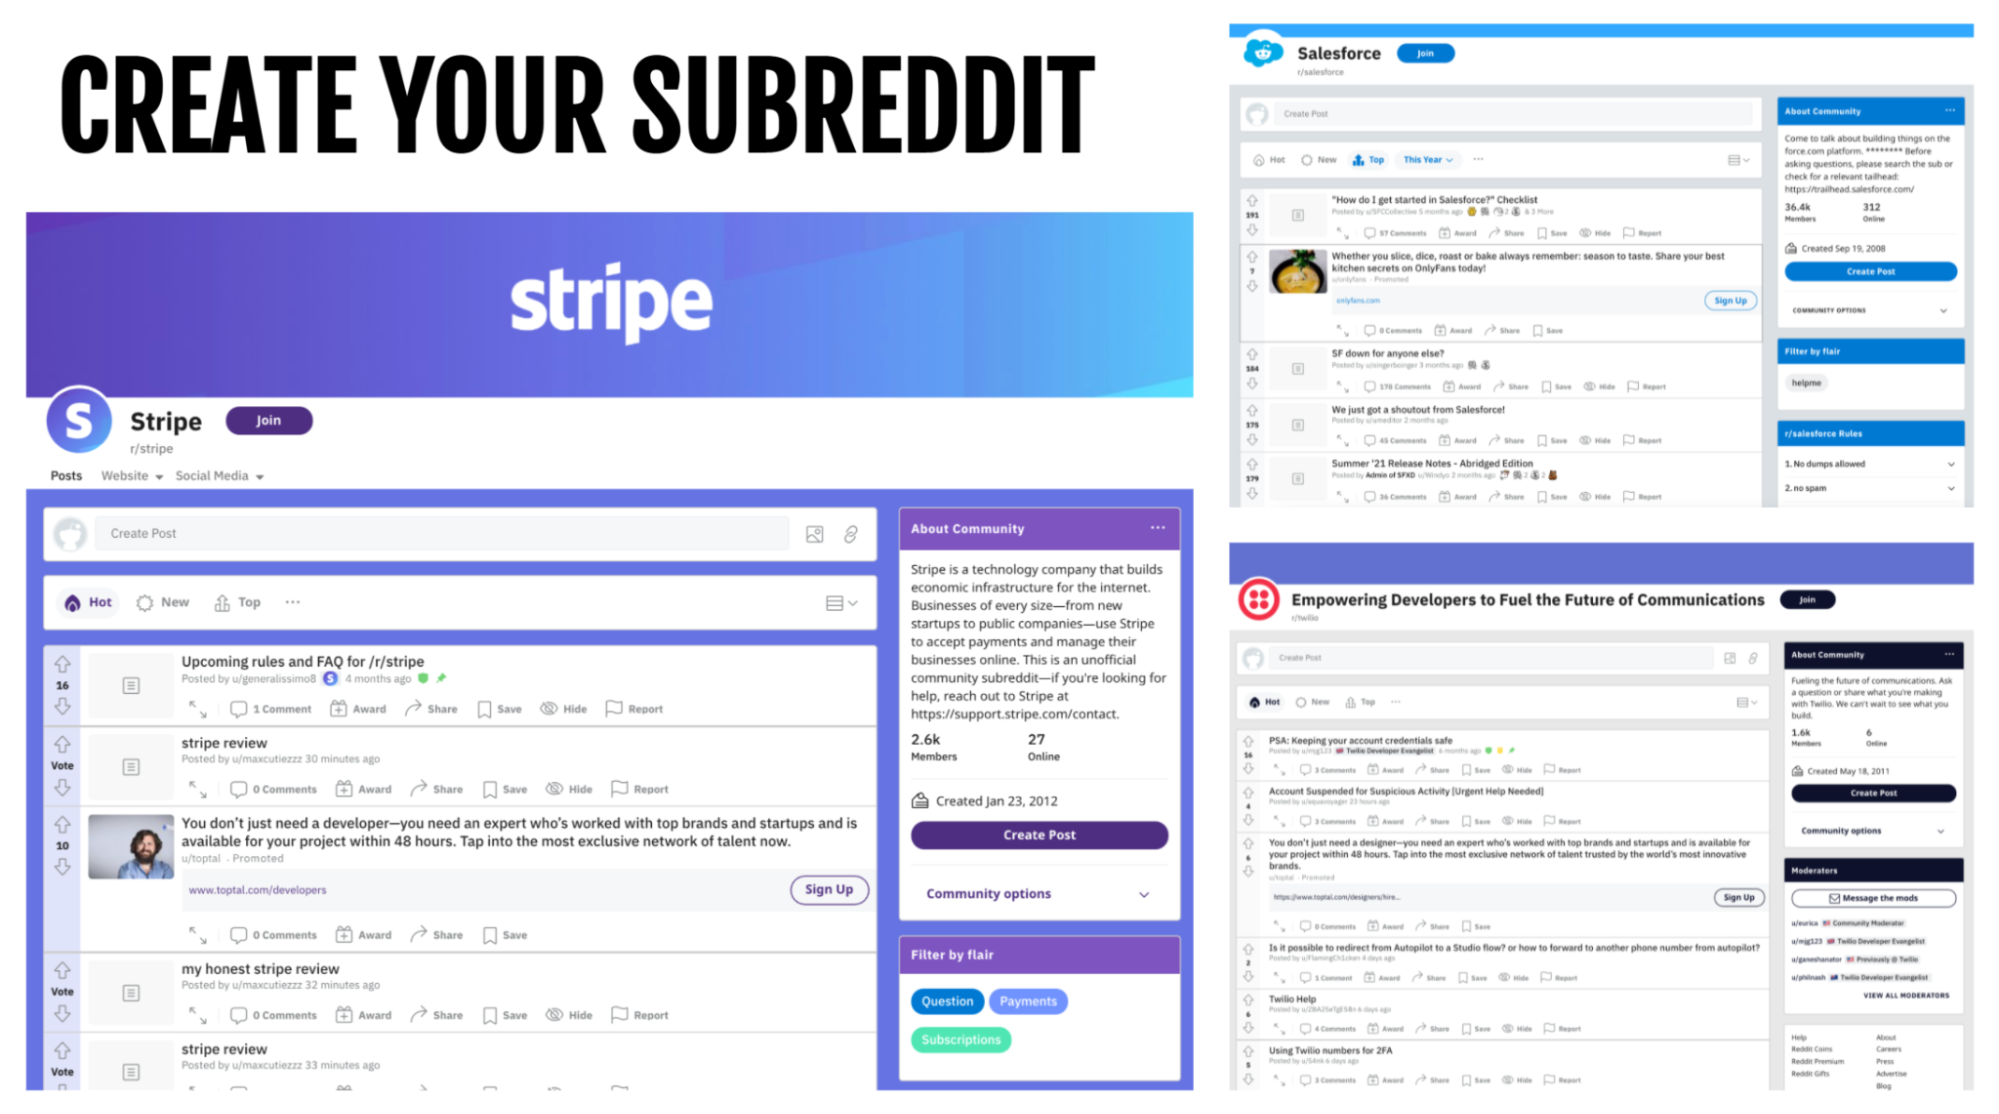 Creating a subreddit